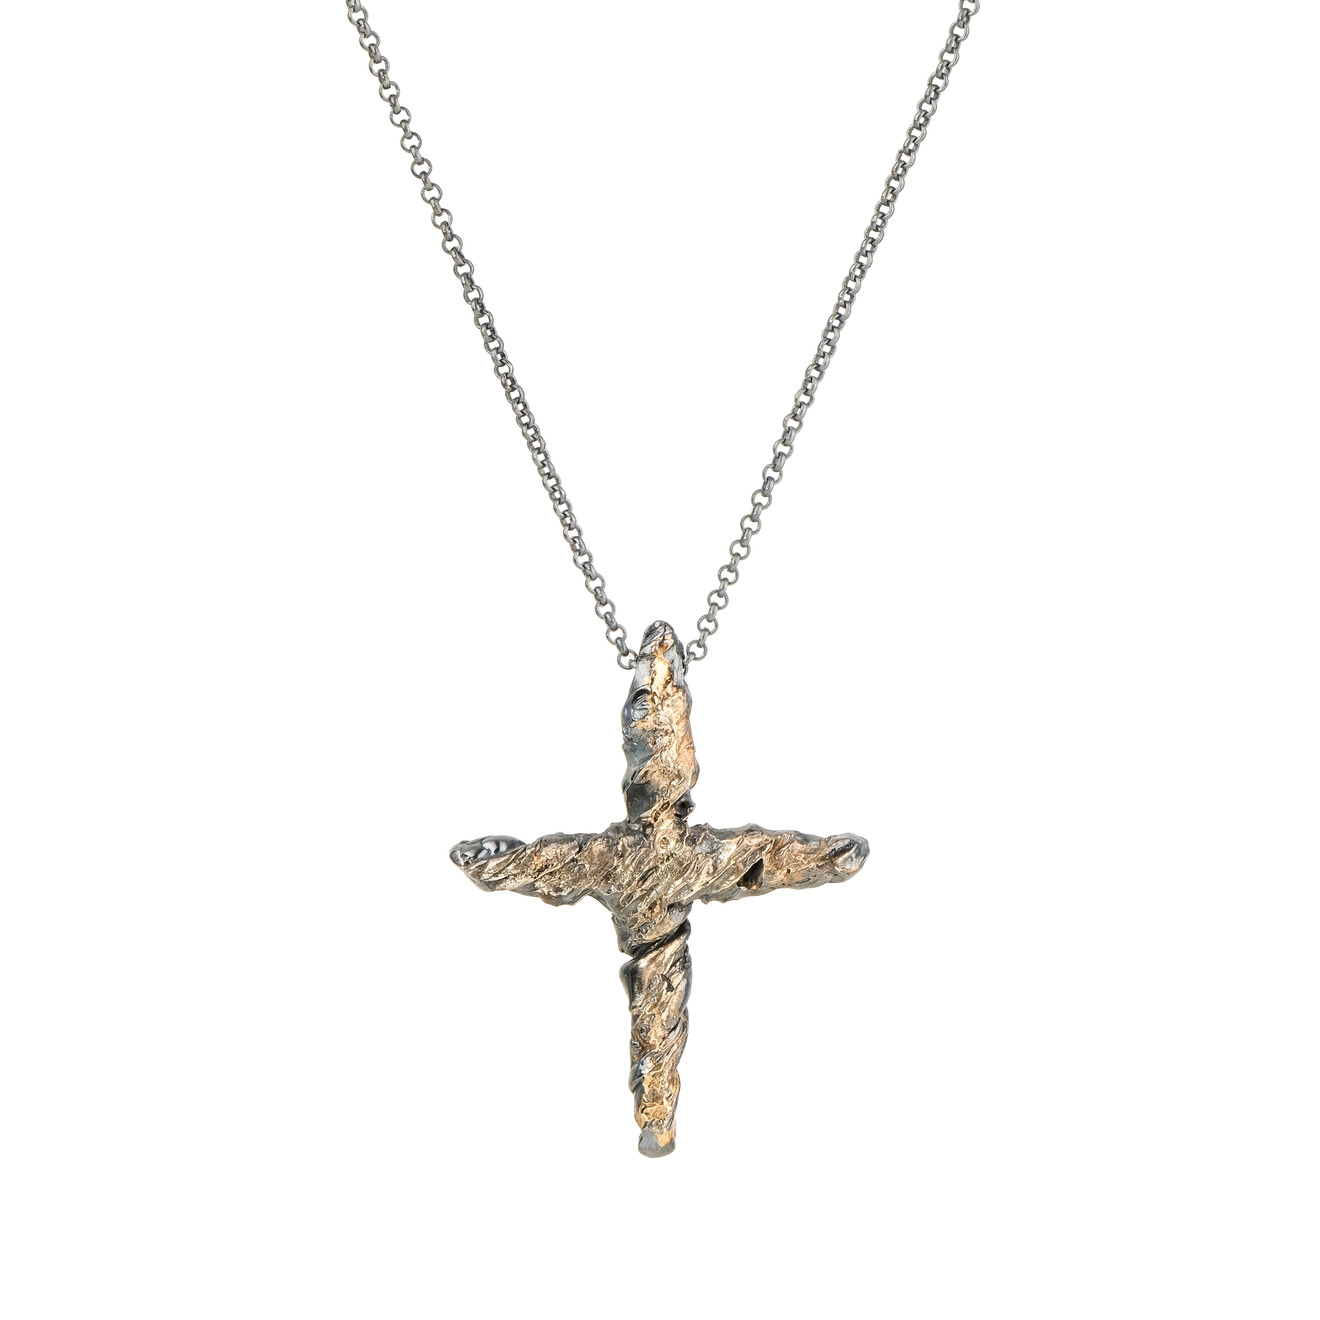 Kintsugi Jewelry Кулон Cross из серебра с позолотой подвеска из серебра с позолотой п4п0540652п эстет